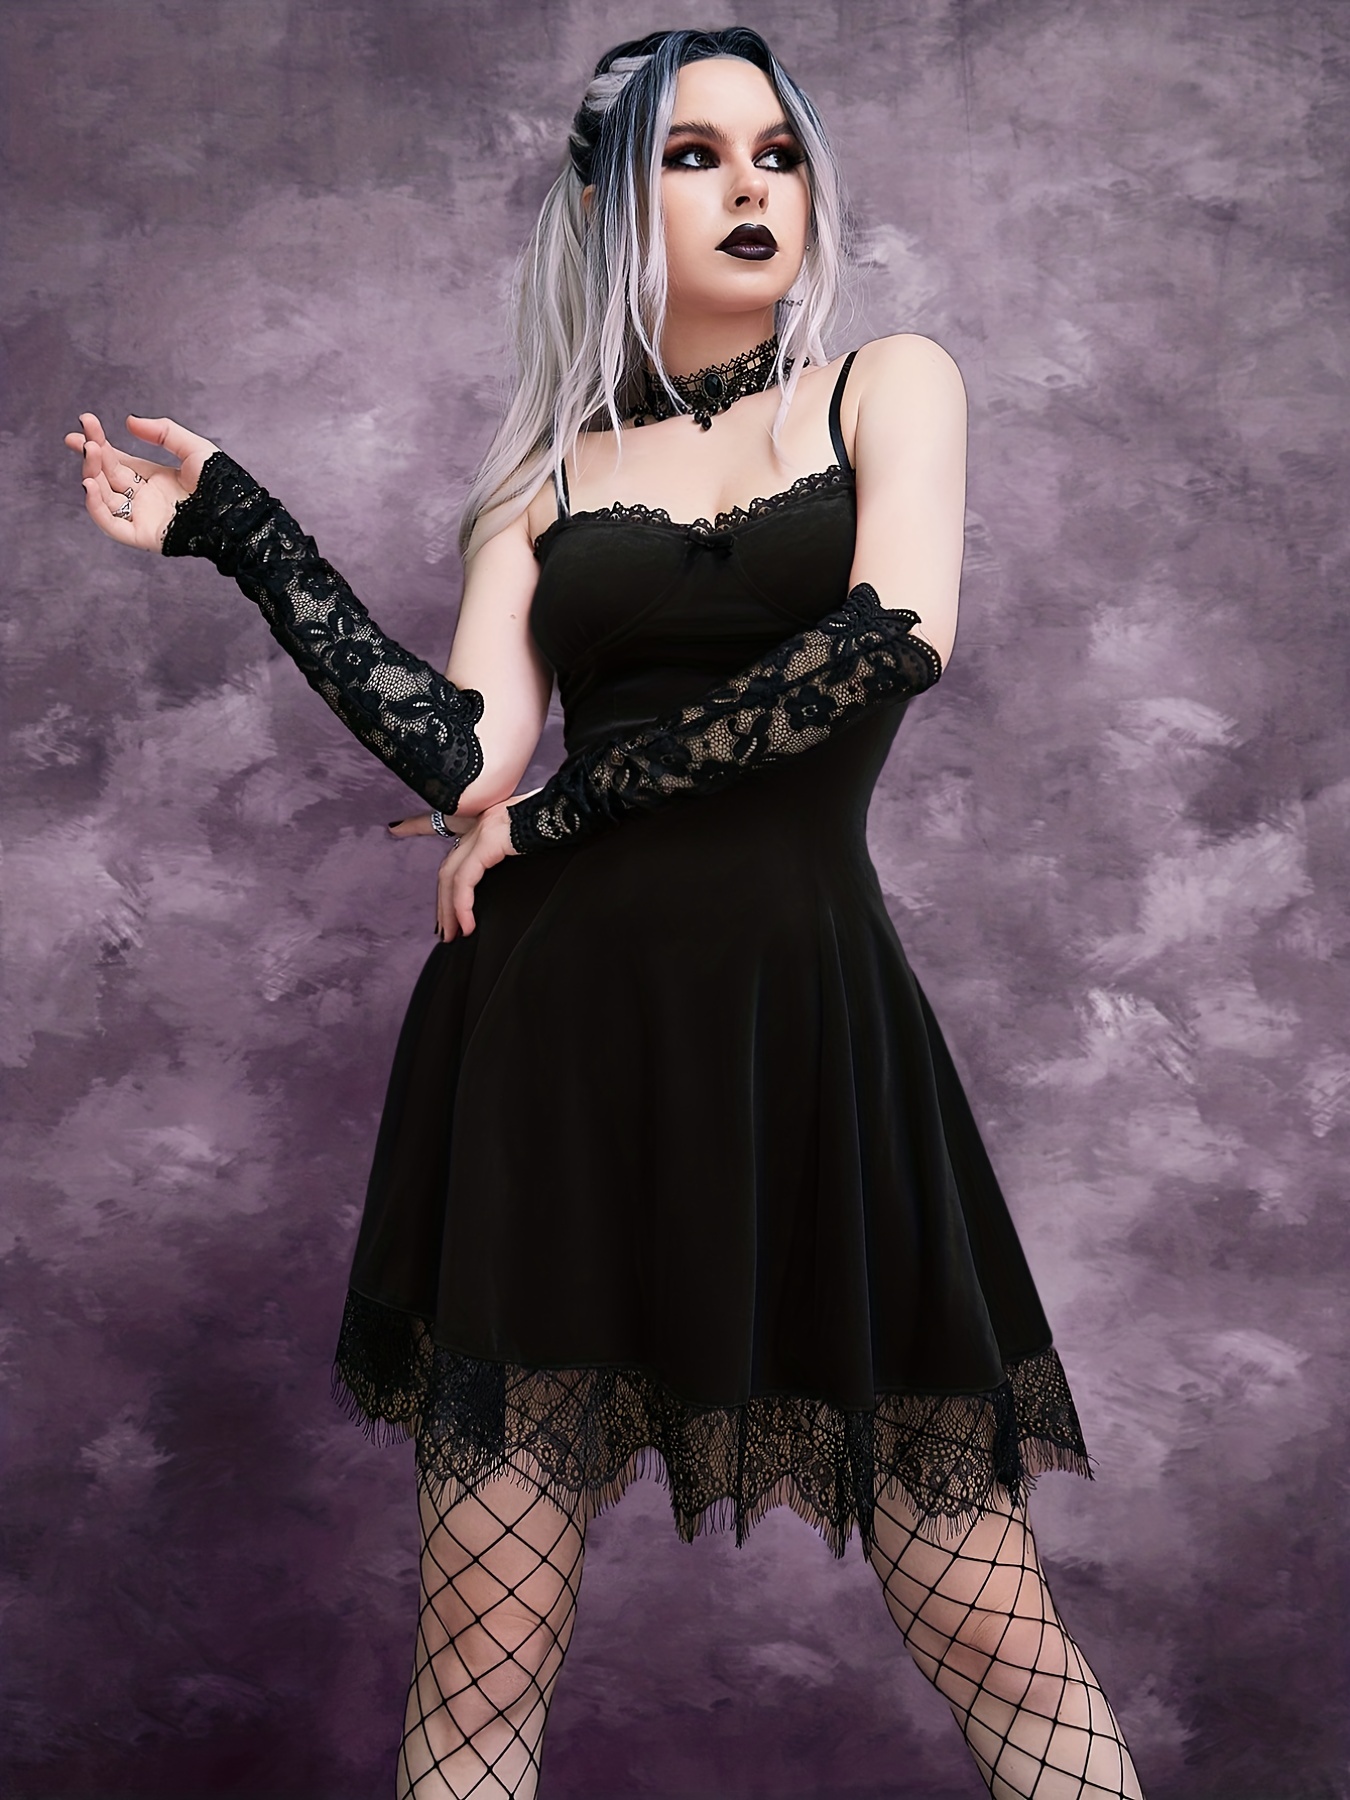 Black sleeveless lace dress